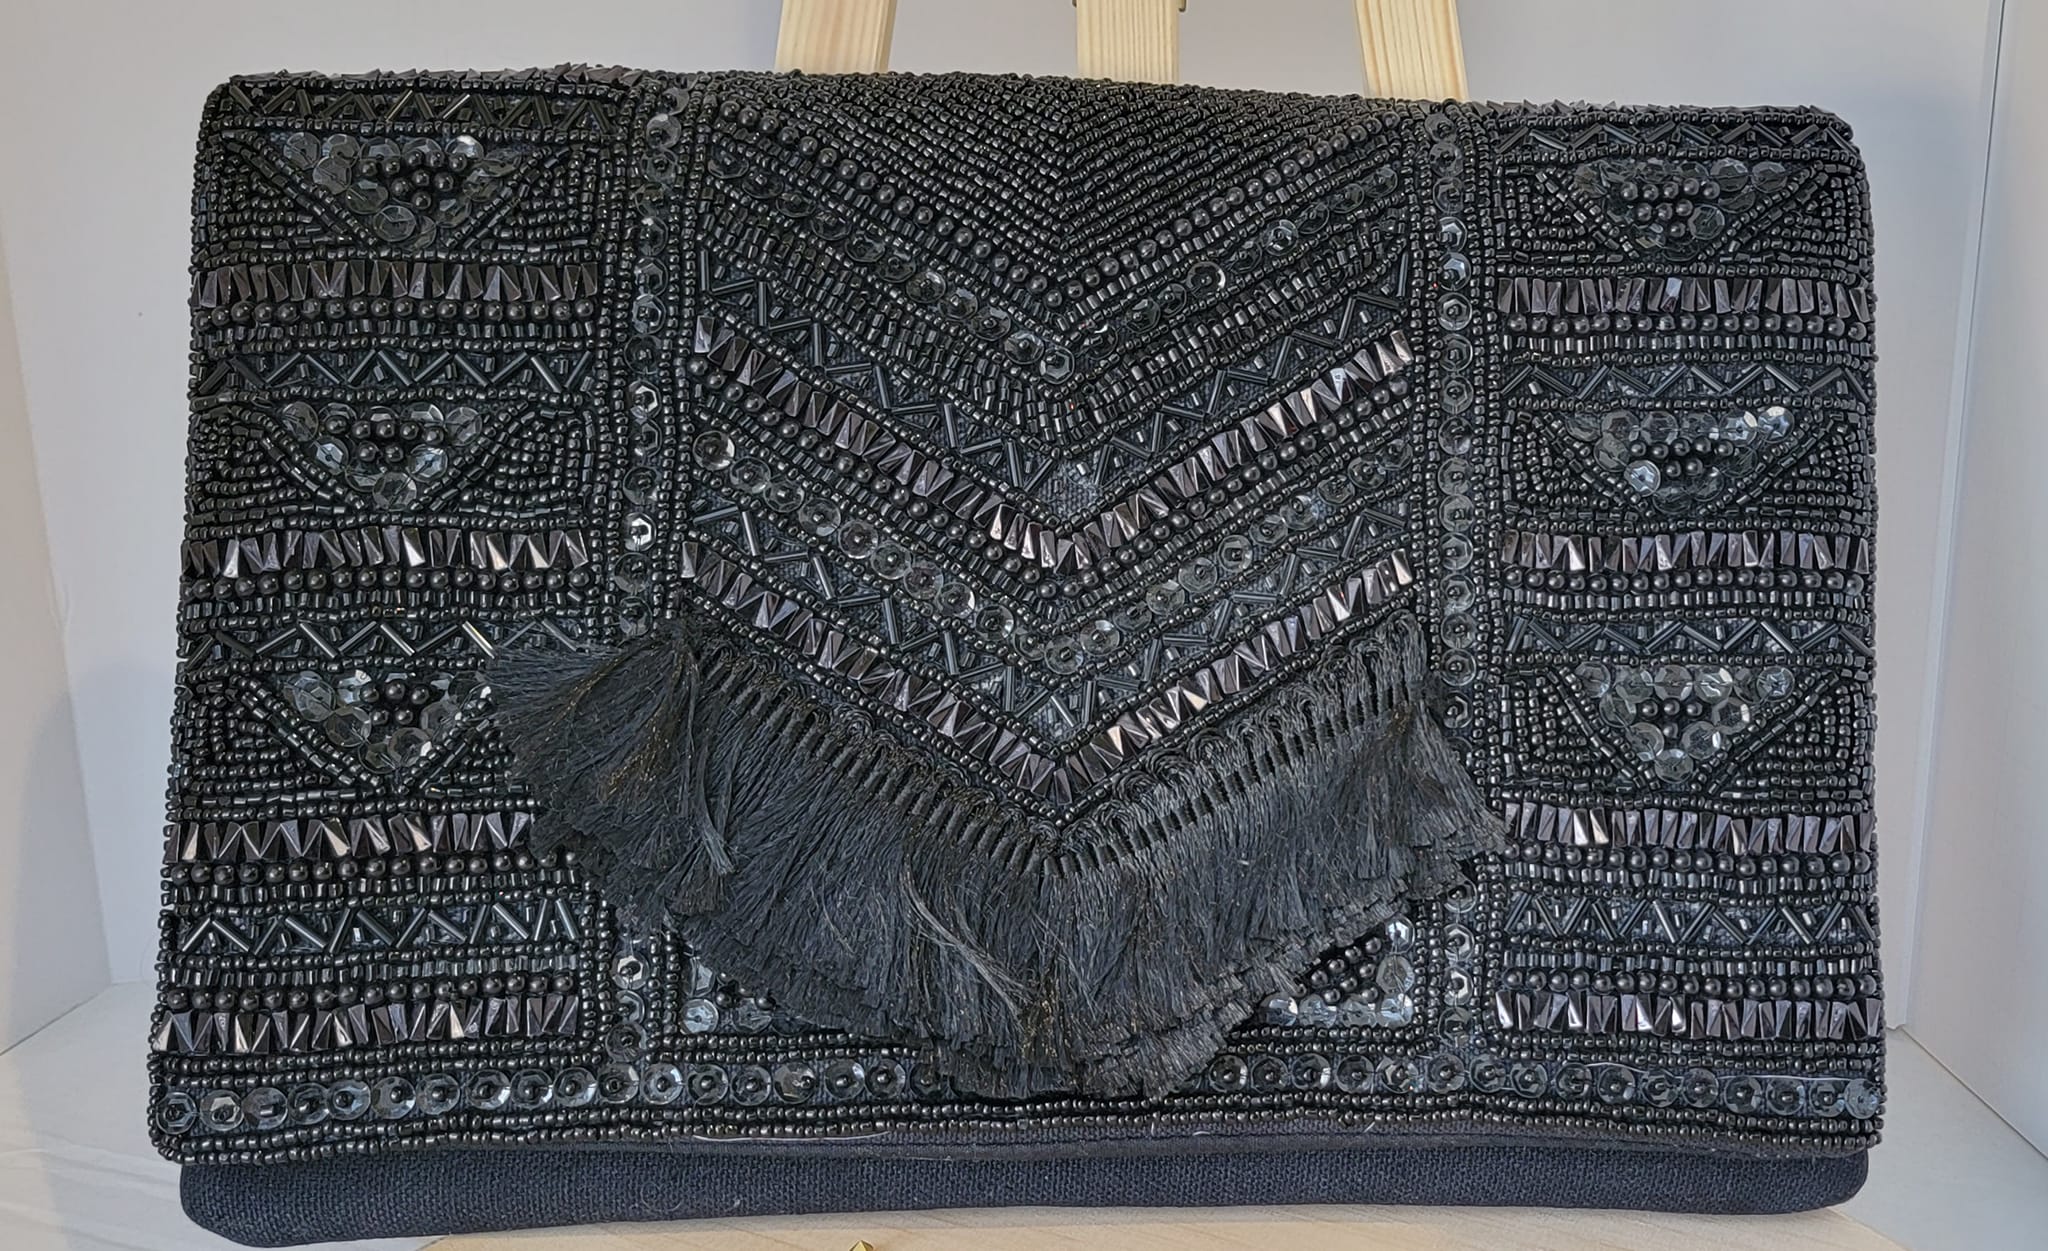 MYUS120 - Black Color Sequins Clutch Bag with Black Beads